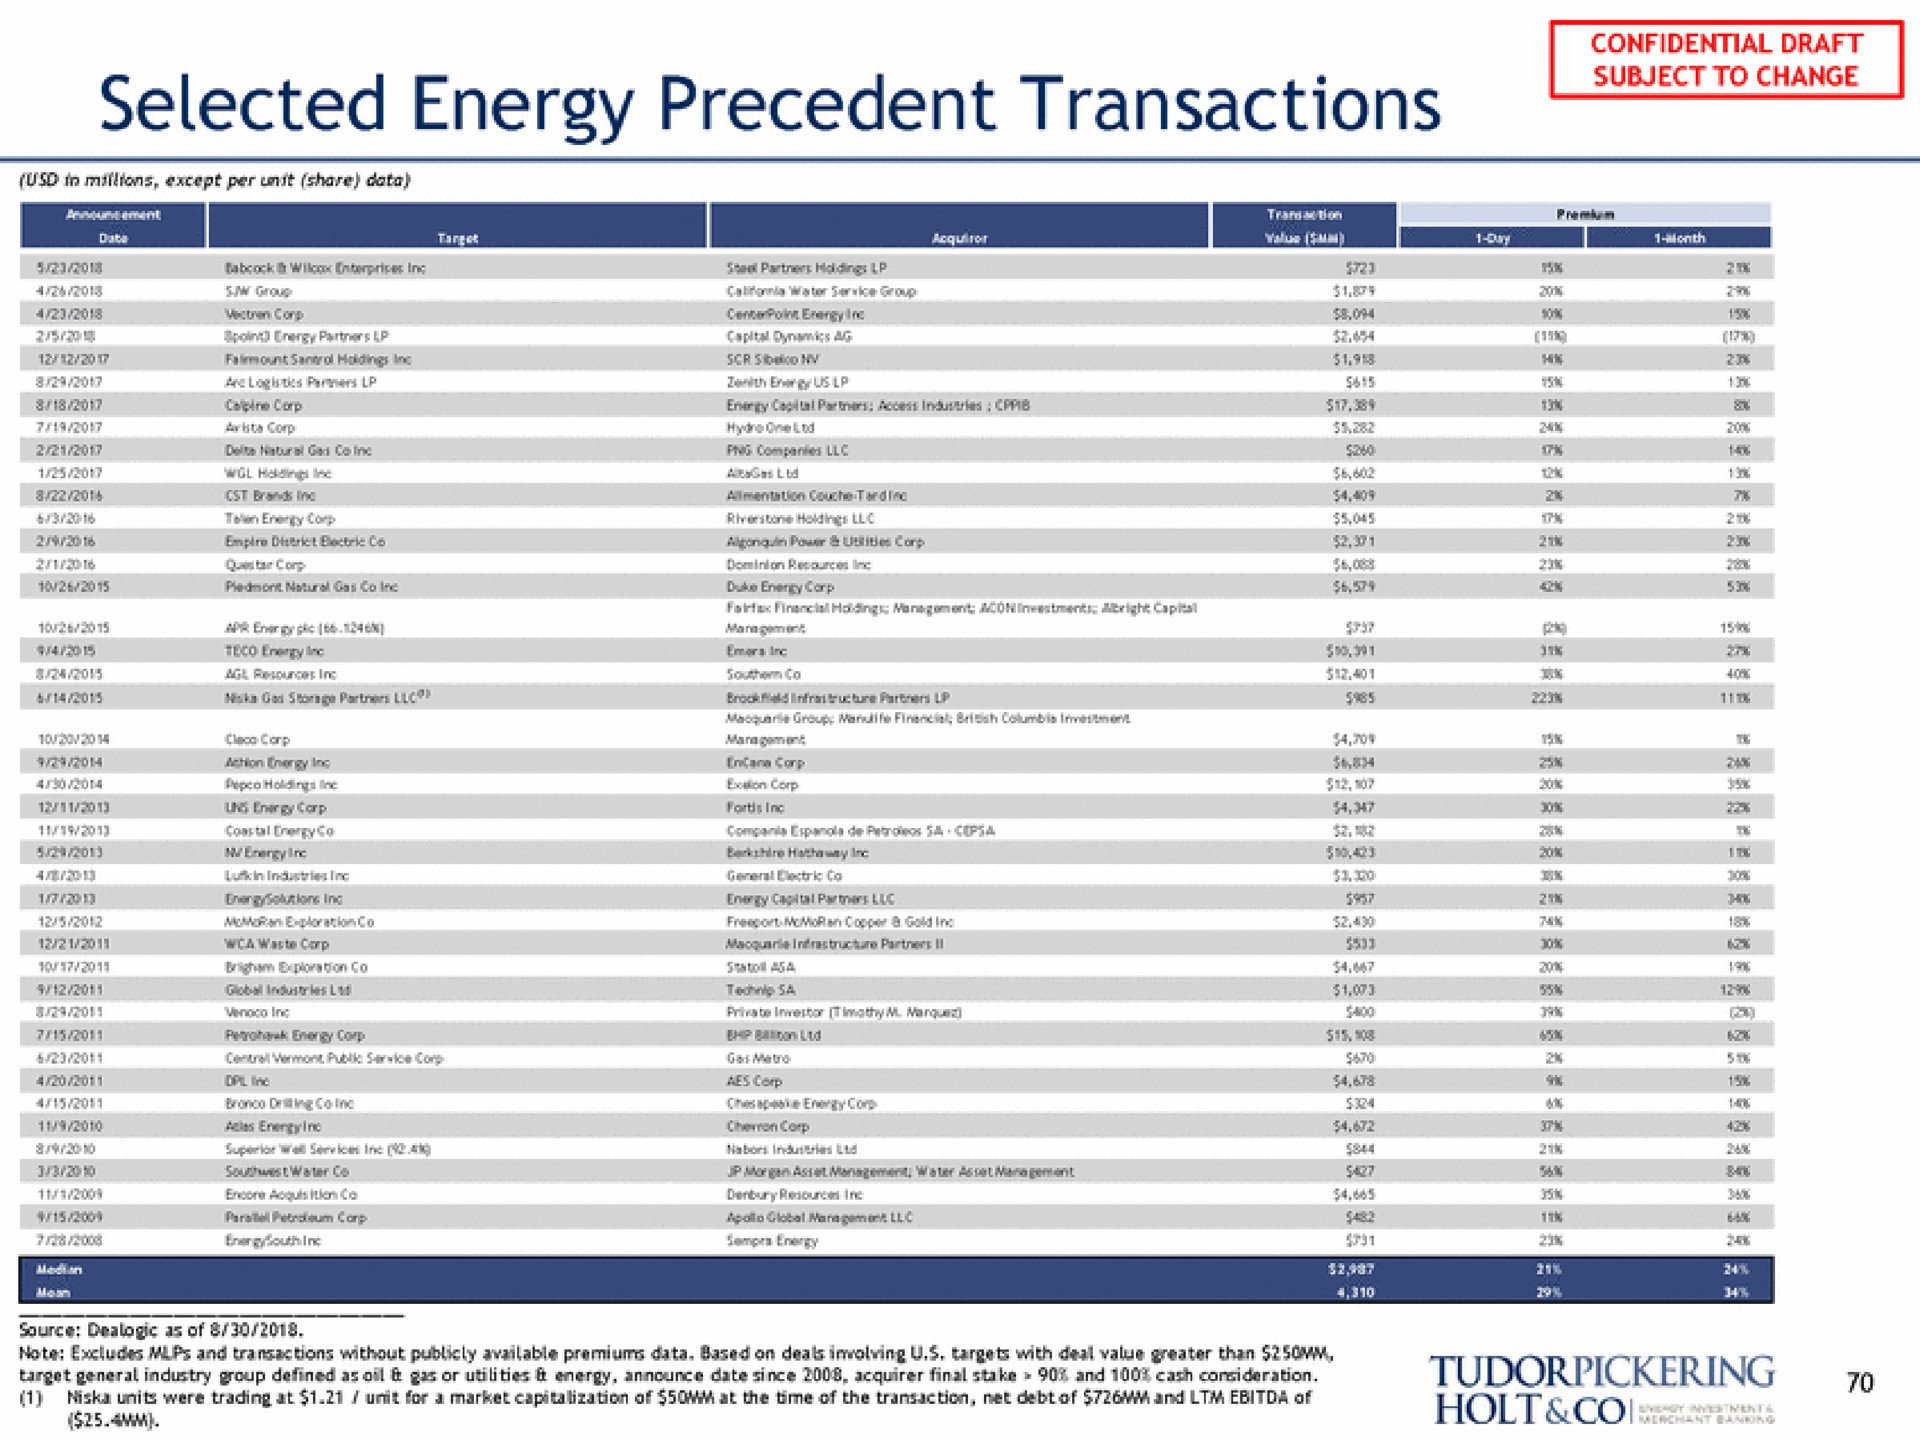 selected energy precedent transactions | Tudor, Pickering, Holt & Co